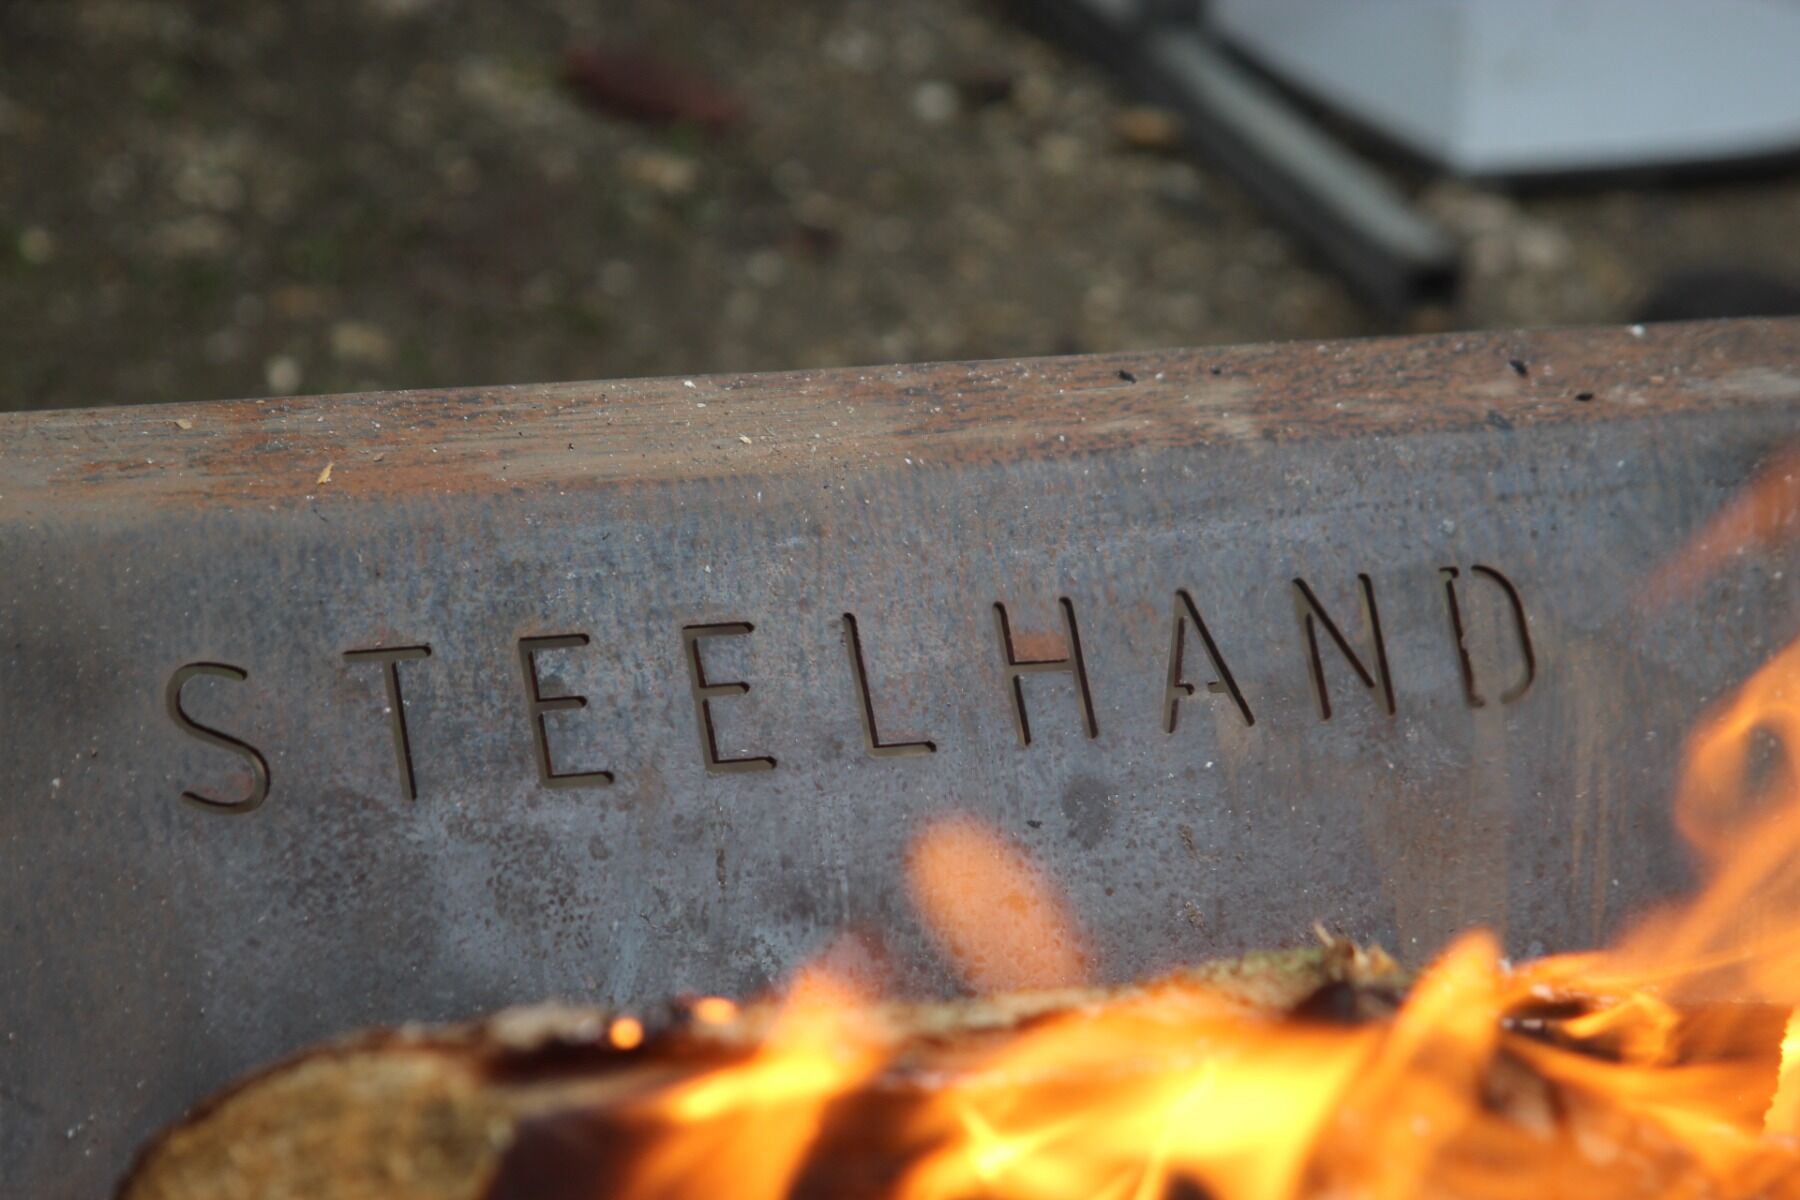 Steelhand V-Pit Feuerkorb